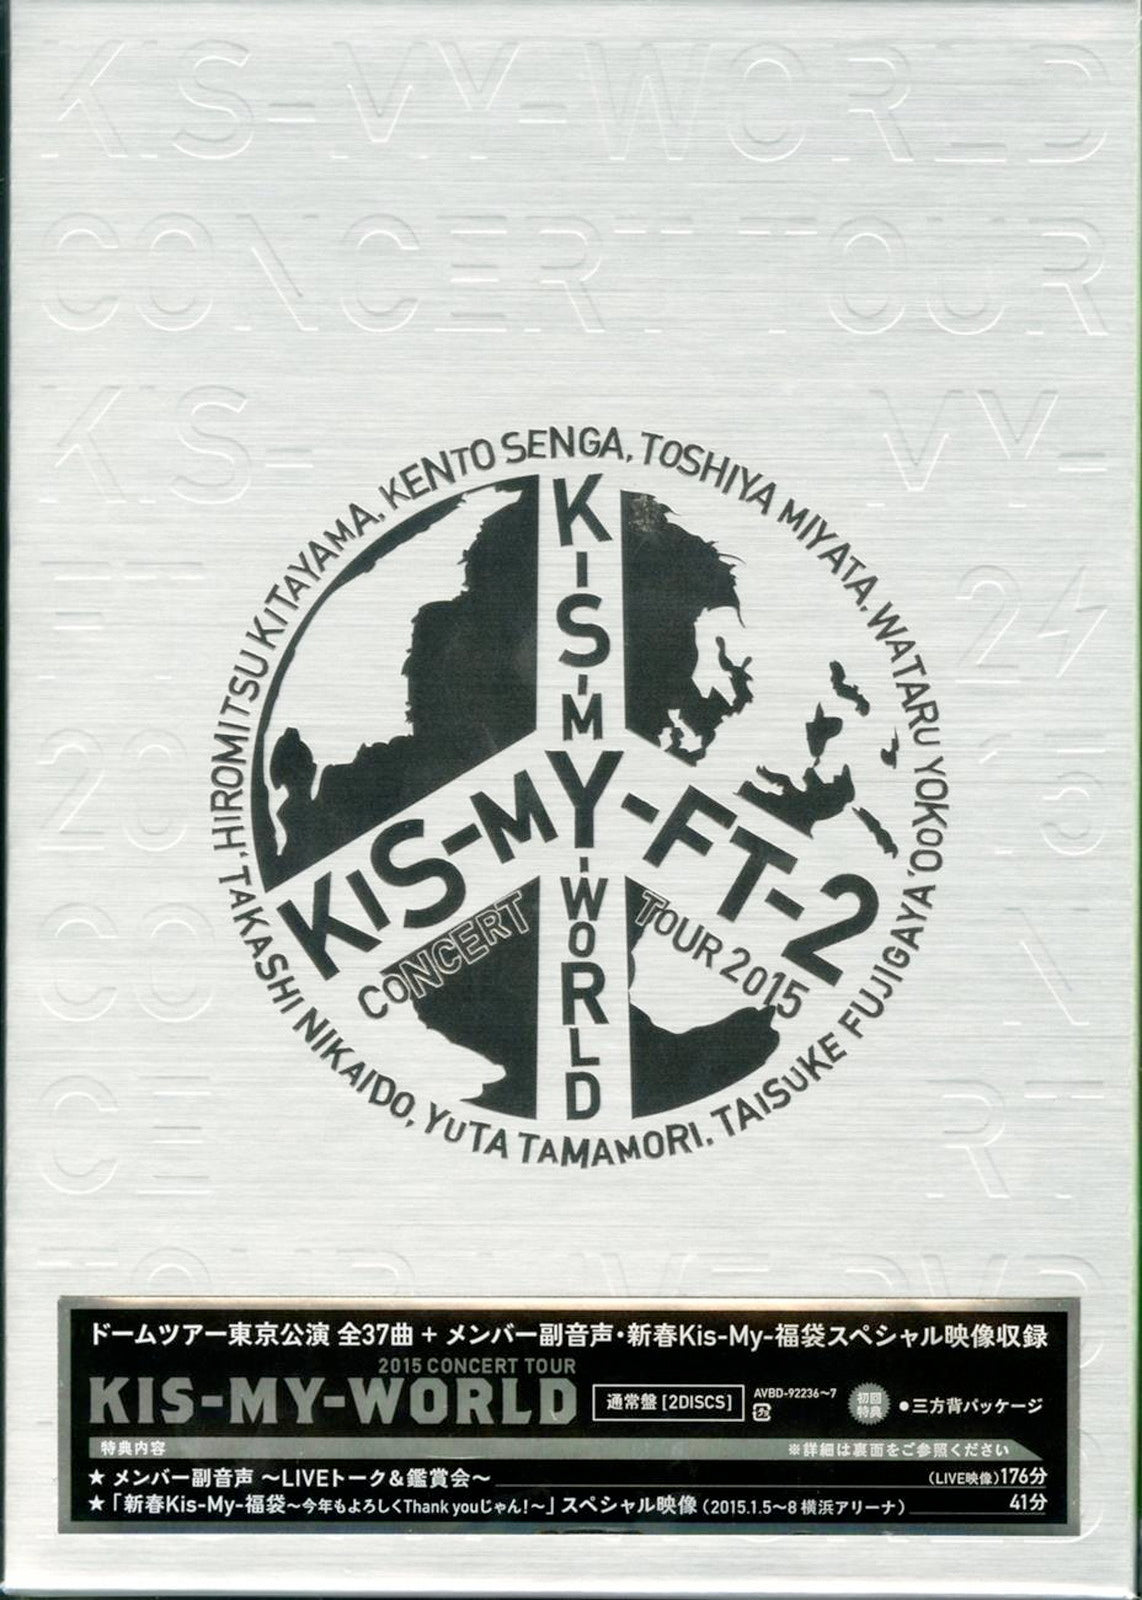 Kis-My-Ft2 - 2015 Concert Tour Kis-My-World - Japan 2 DVD - CDs